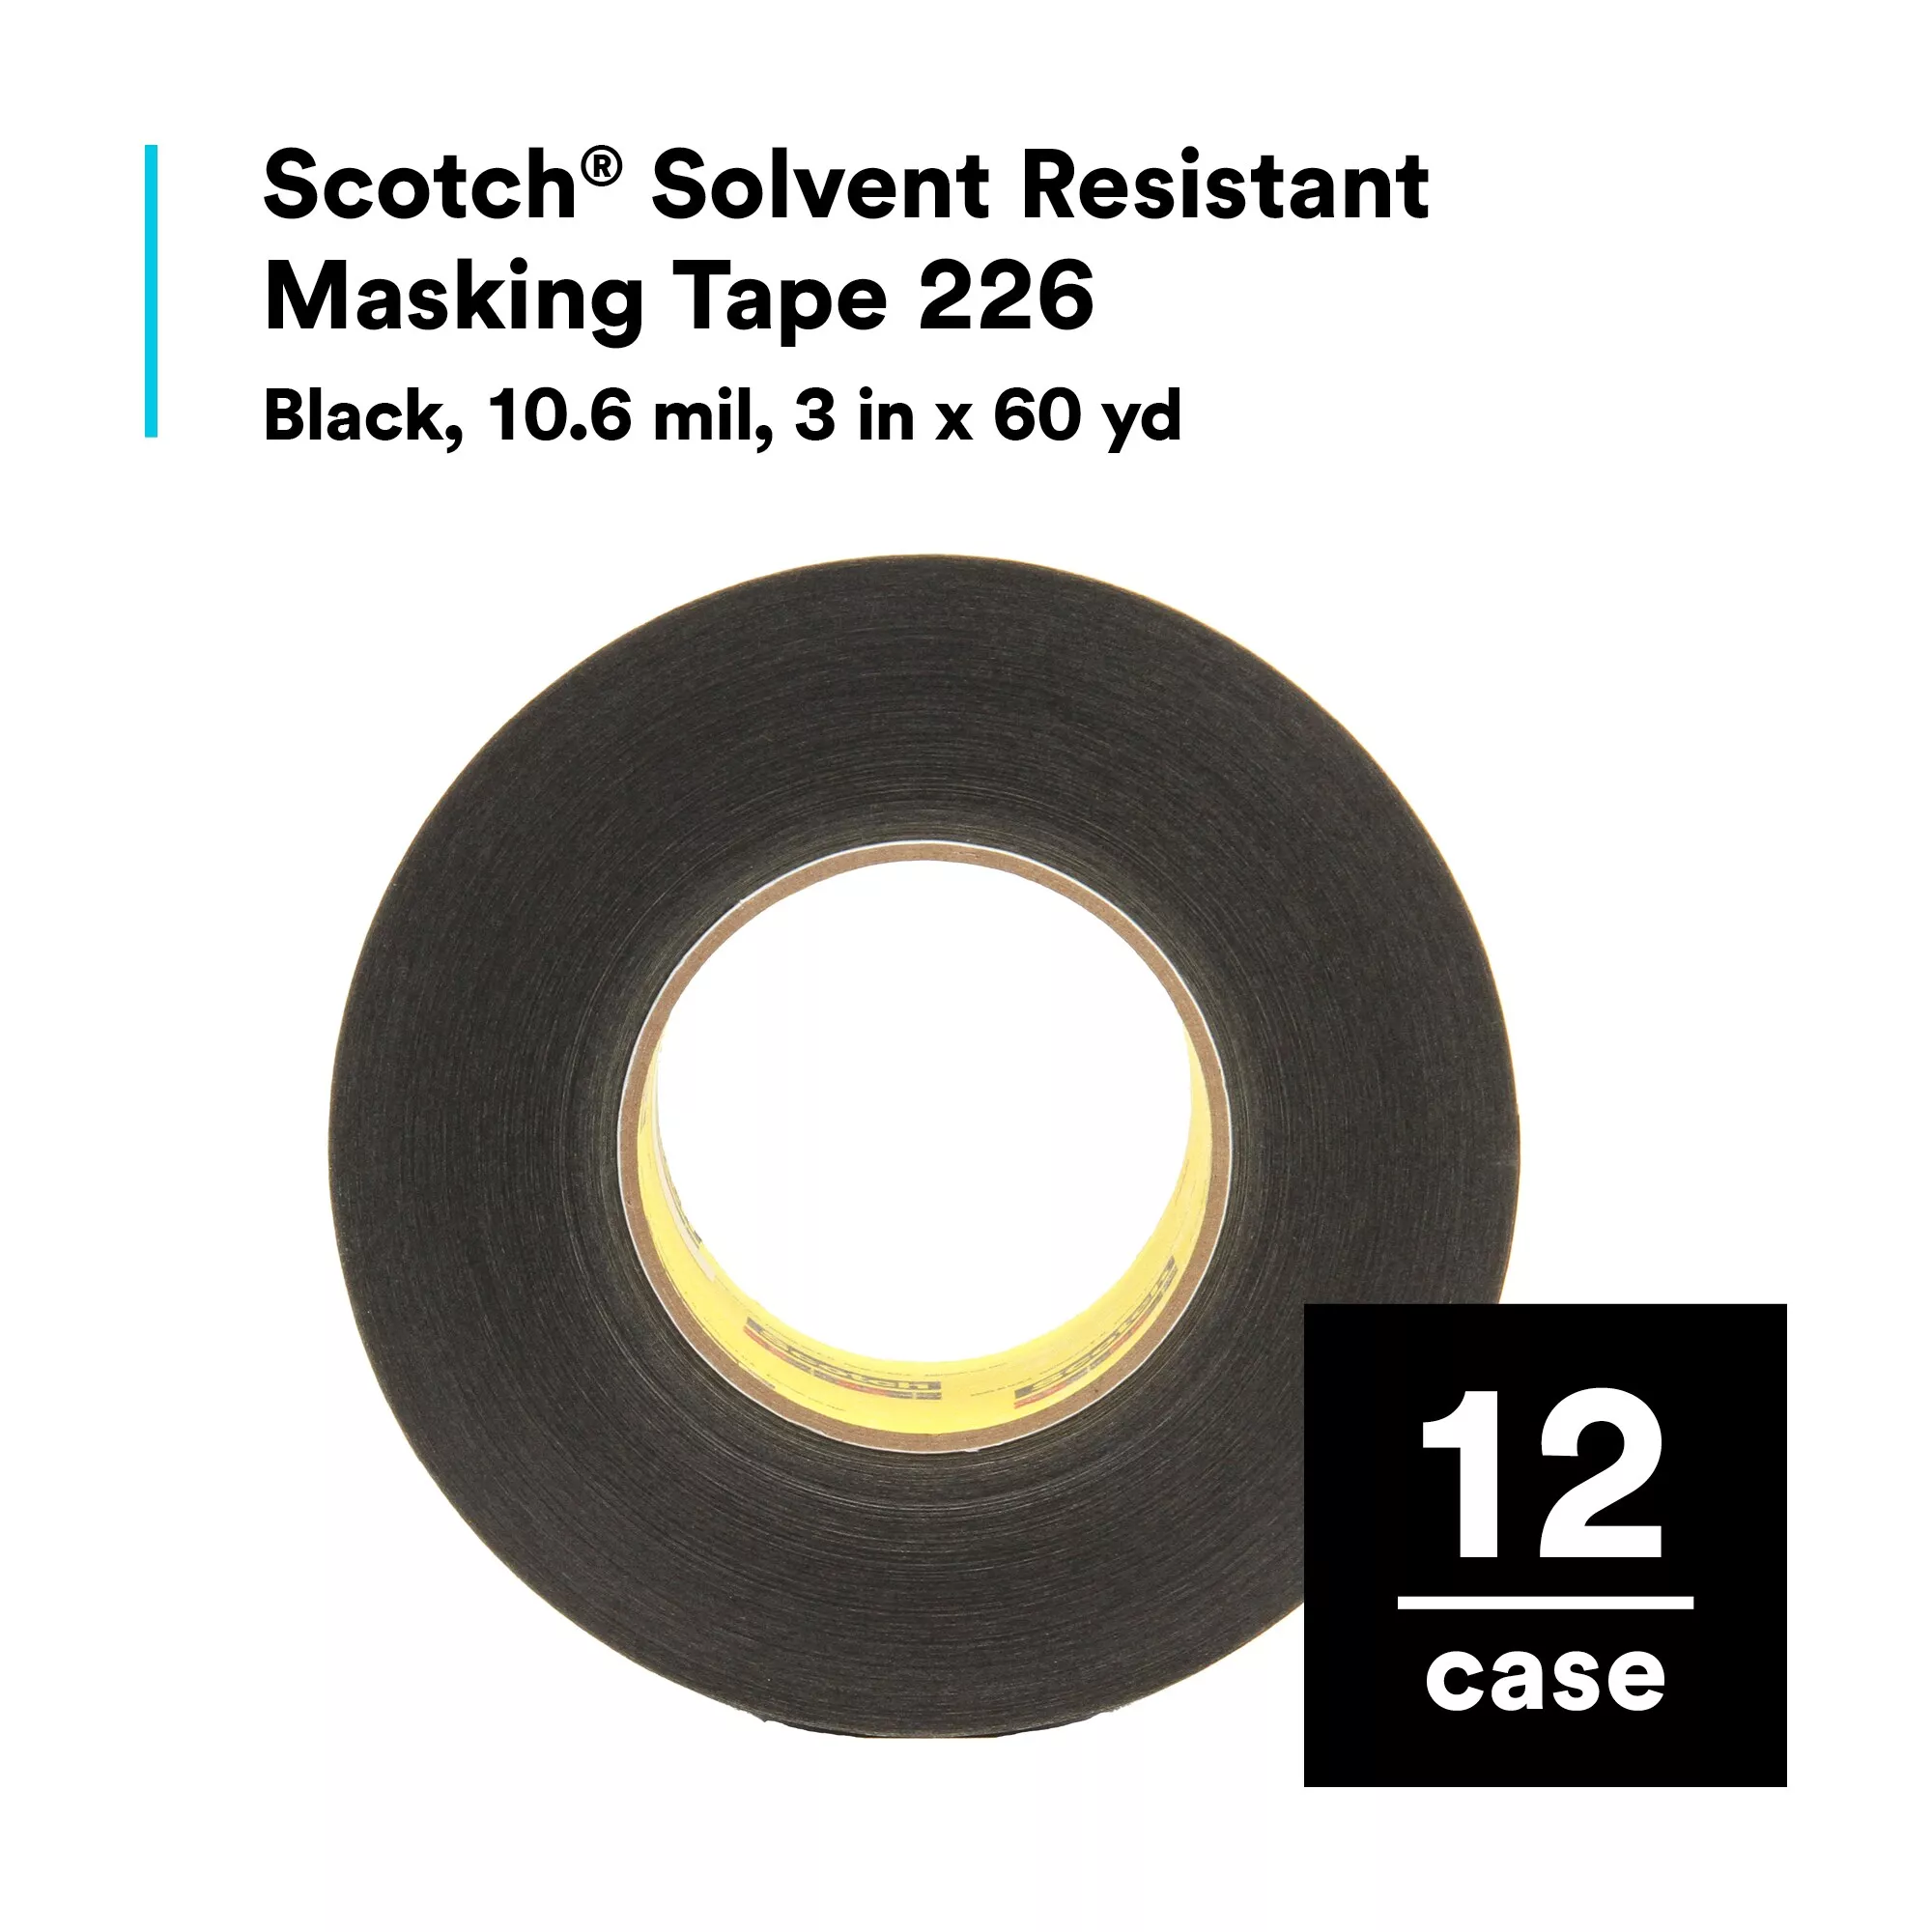 SKU 7010373601 | Scotch® Solvent Resistant Masking Tape 226